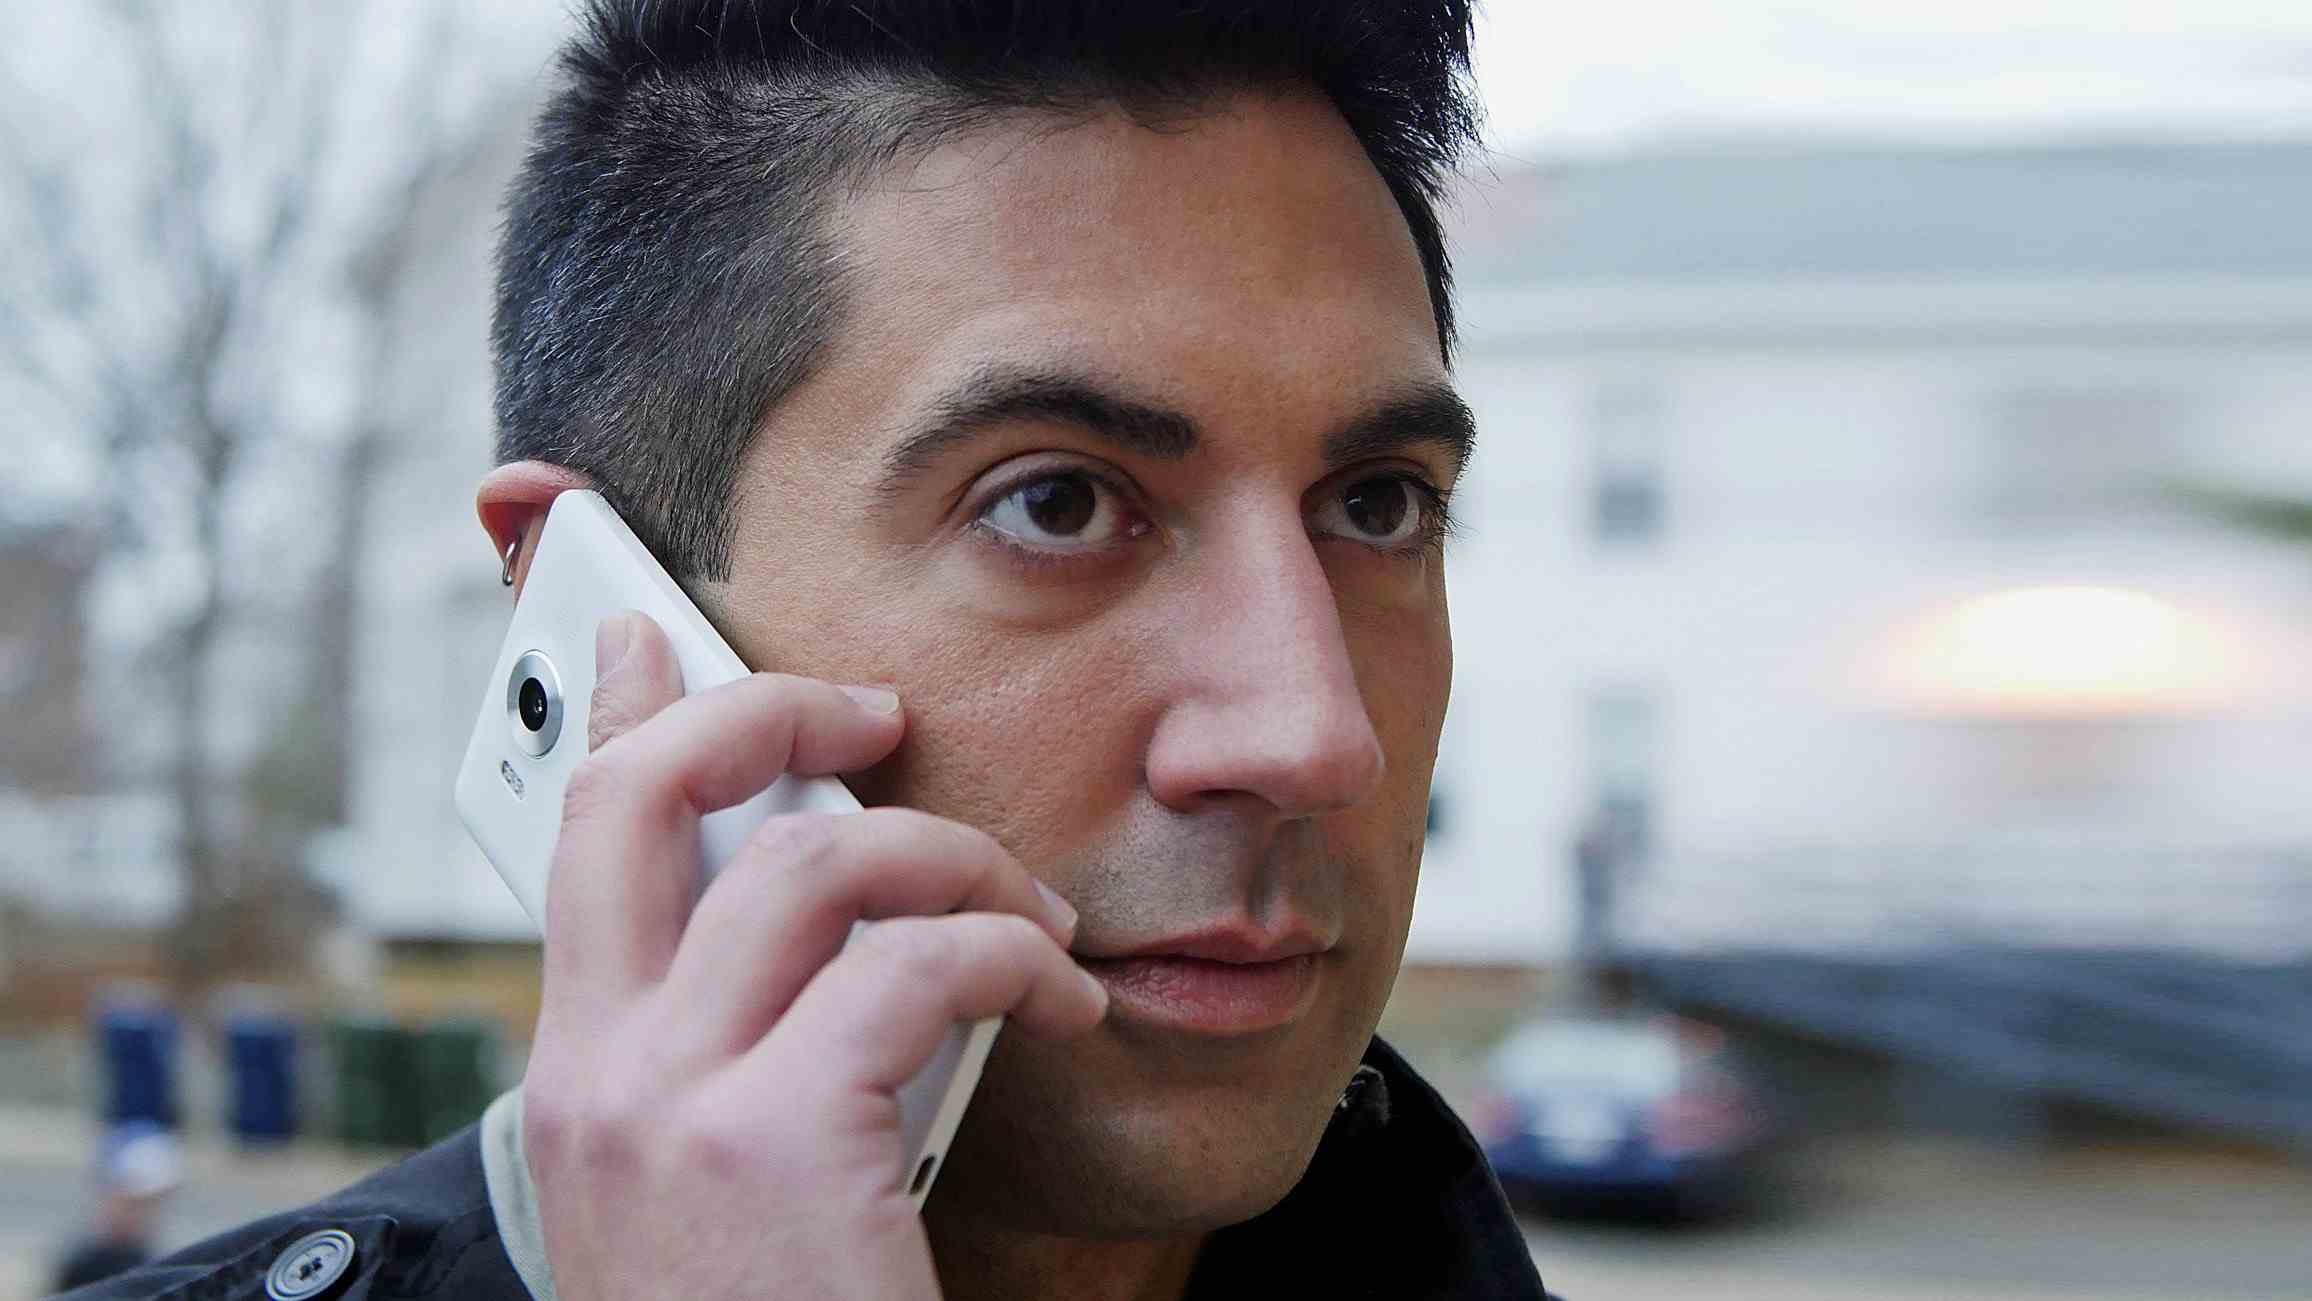 Daniel Rubino bir Lumia telefon kullanıyor